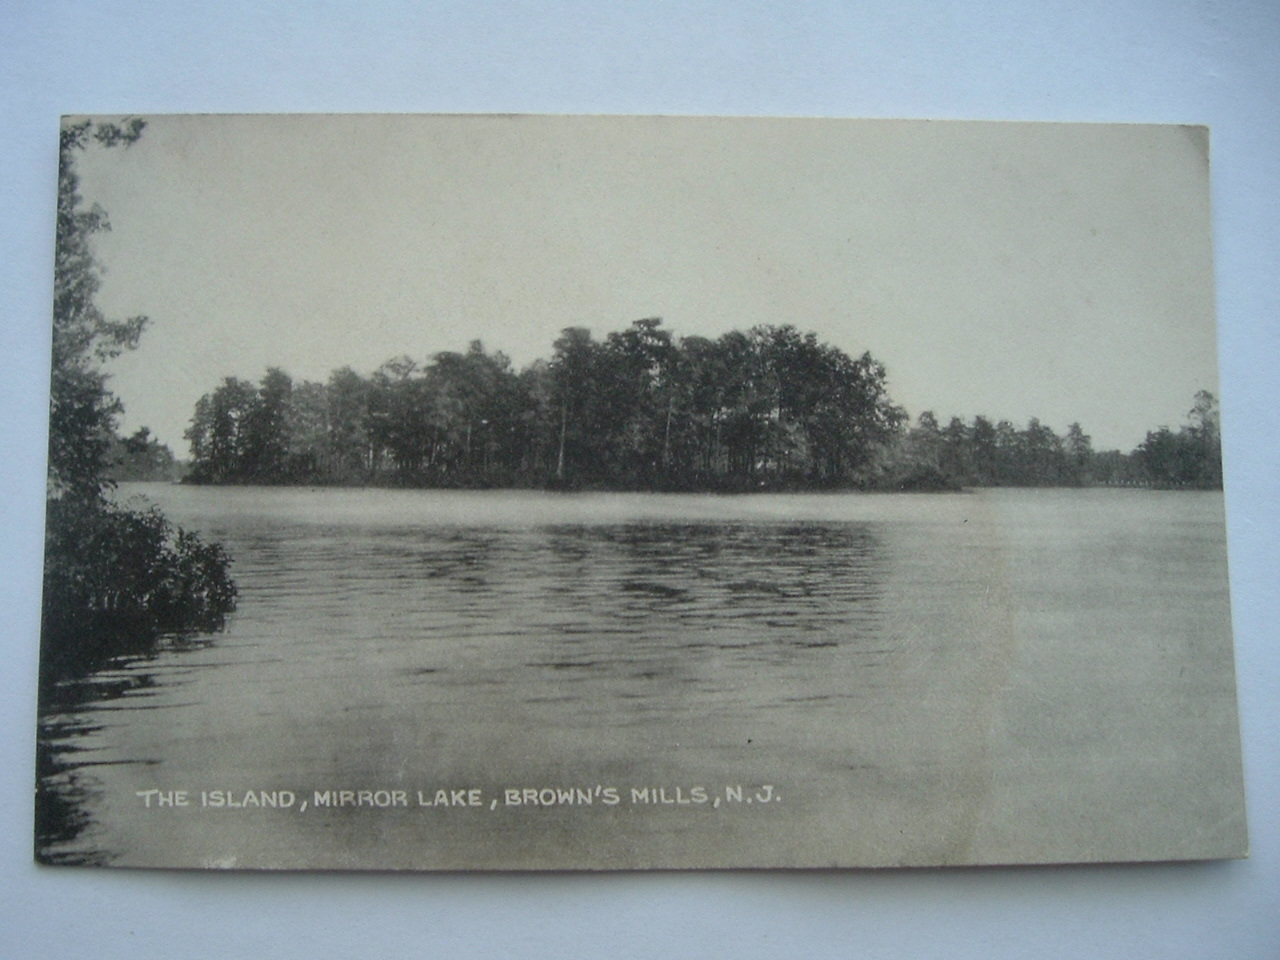 Browns Mills - Mirroro Lake - The Island